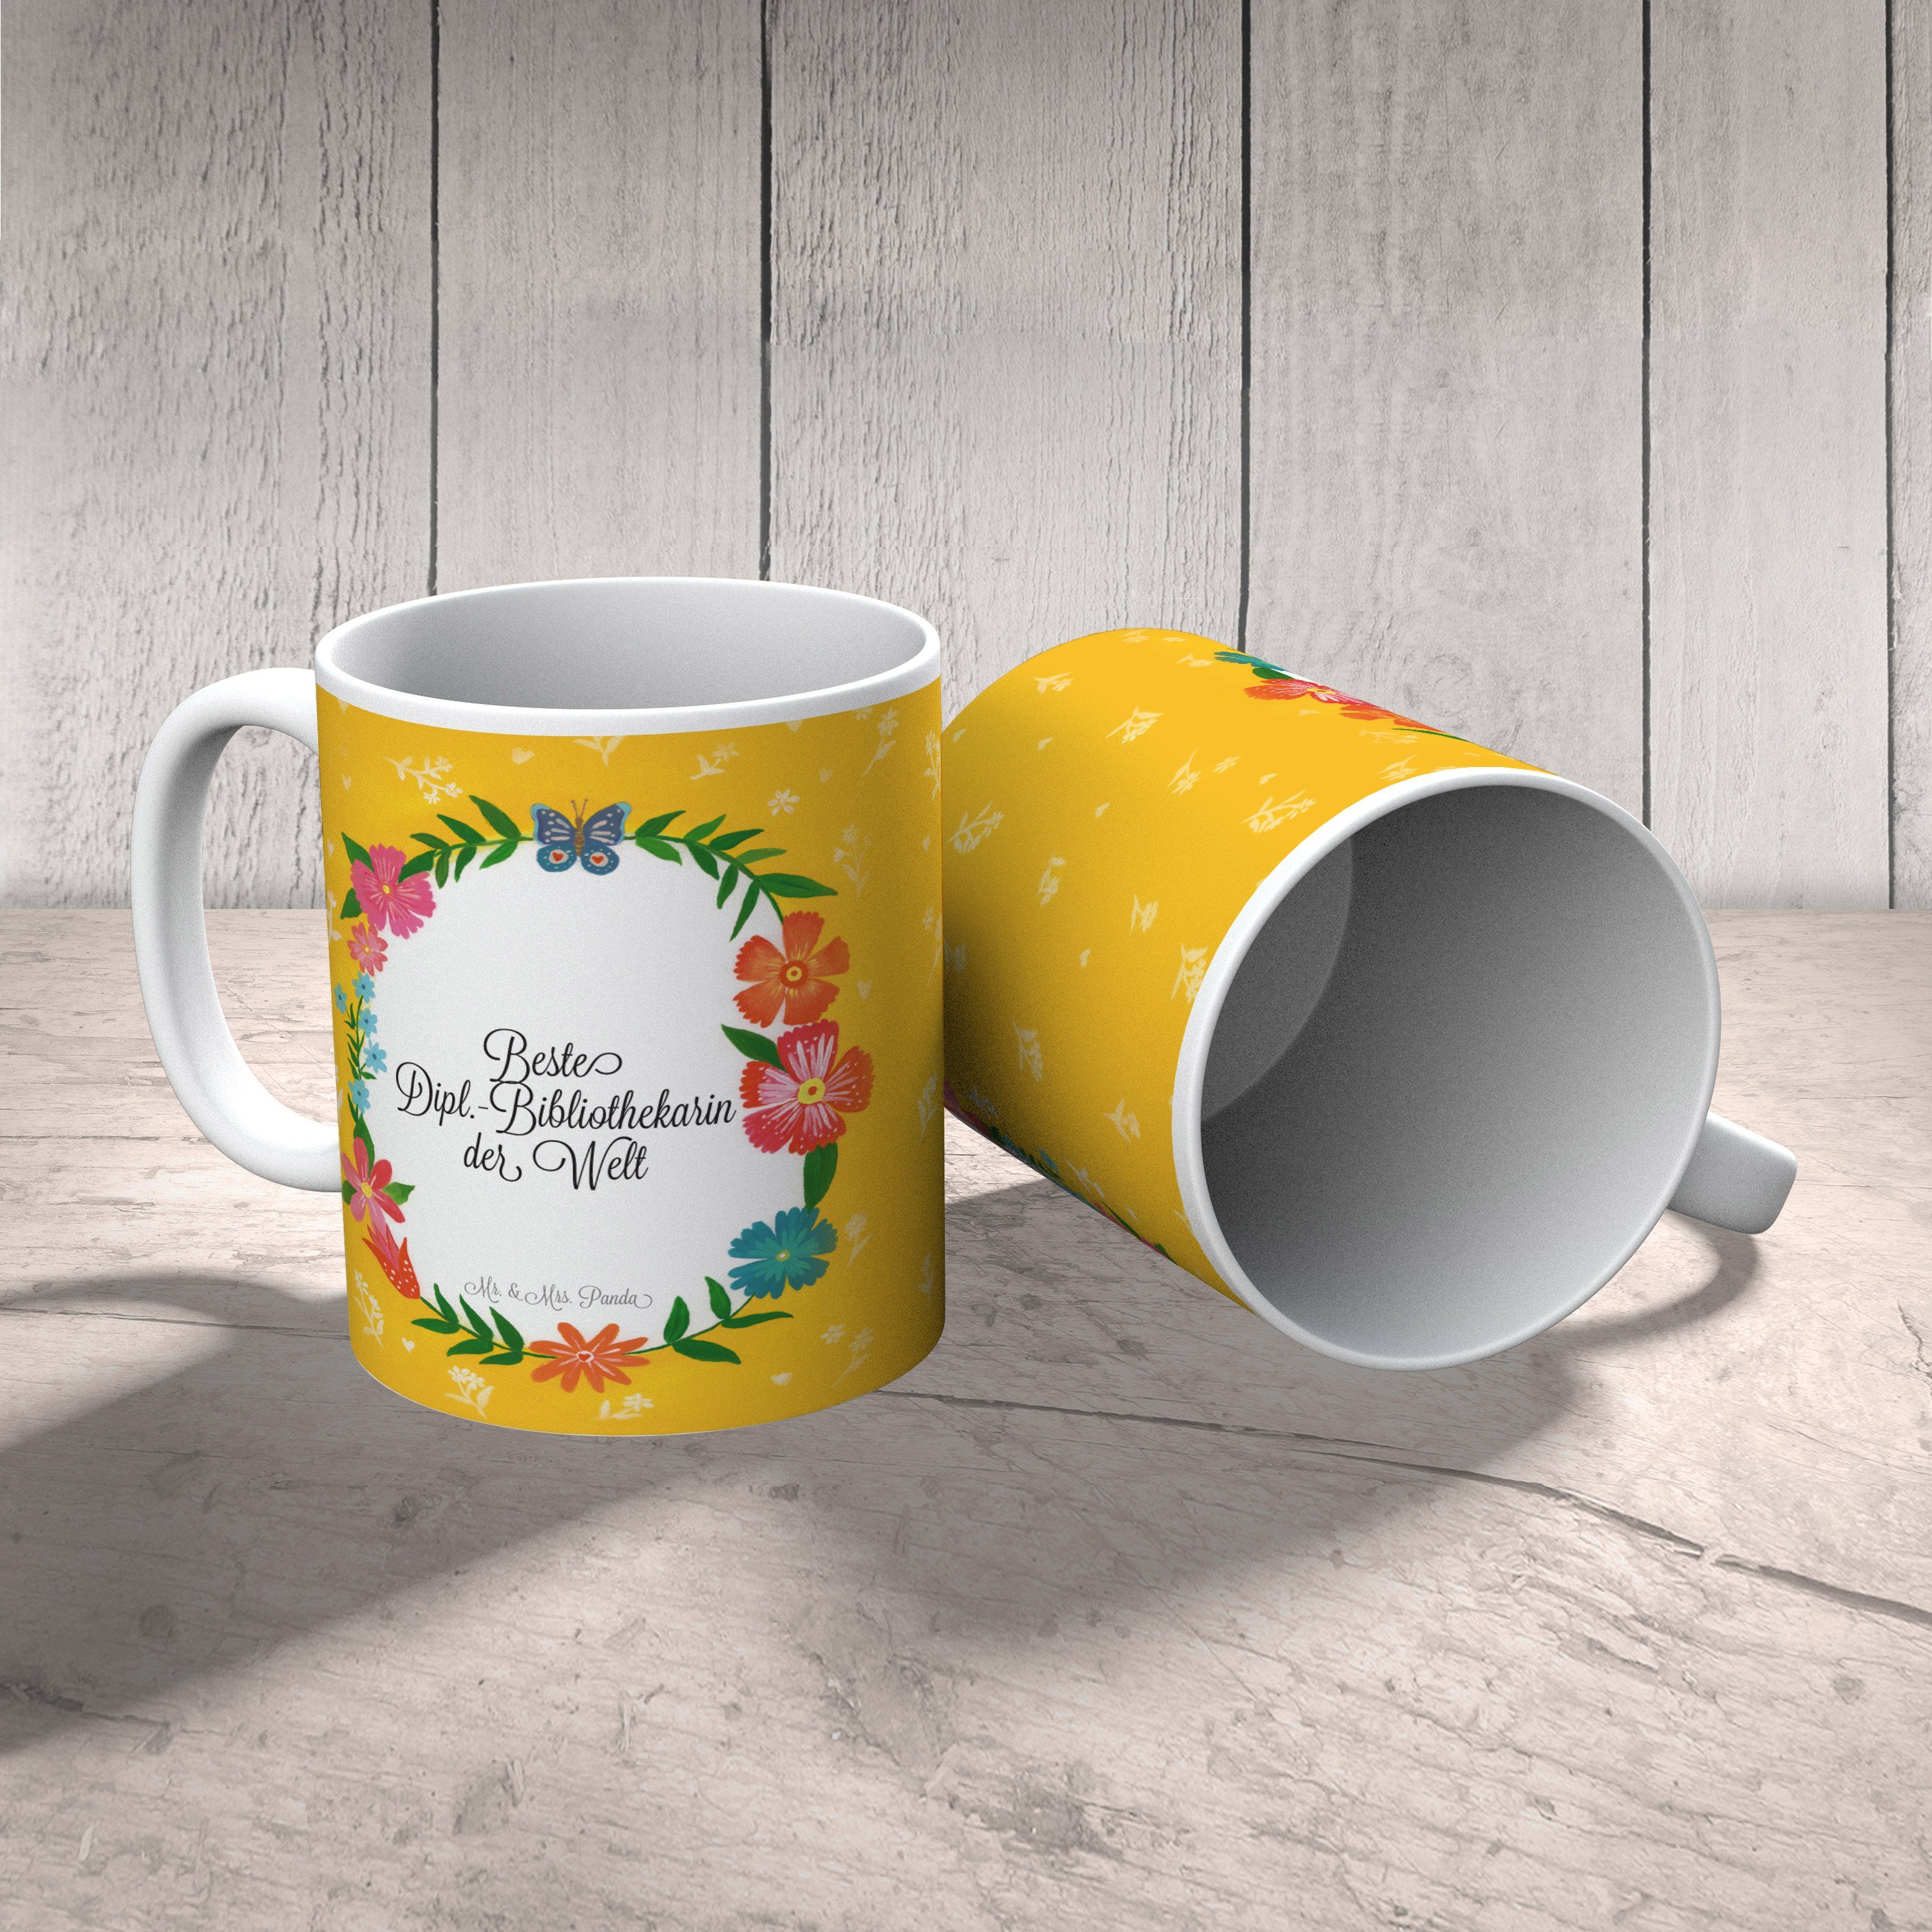 Mr. & Mrs. Panda Tasse Geschenk Kaffeetasse, Geschenk, - Tasse, Keramik Dipl.-Bibliothekarin Gratula